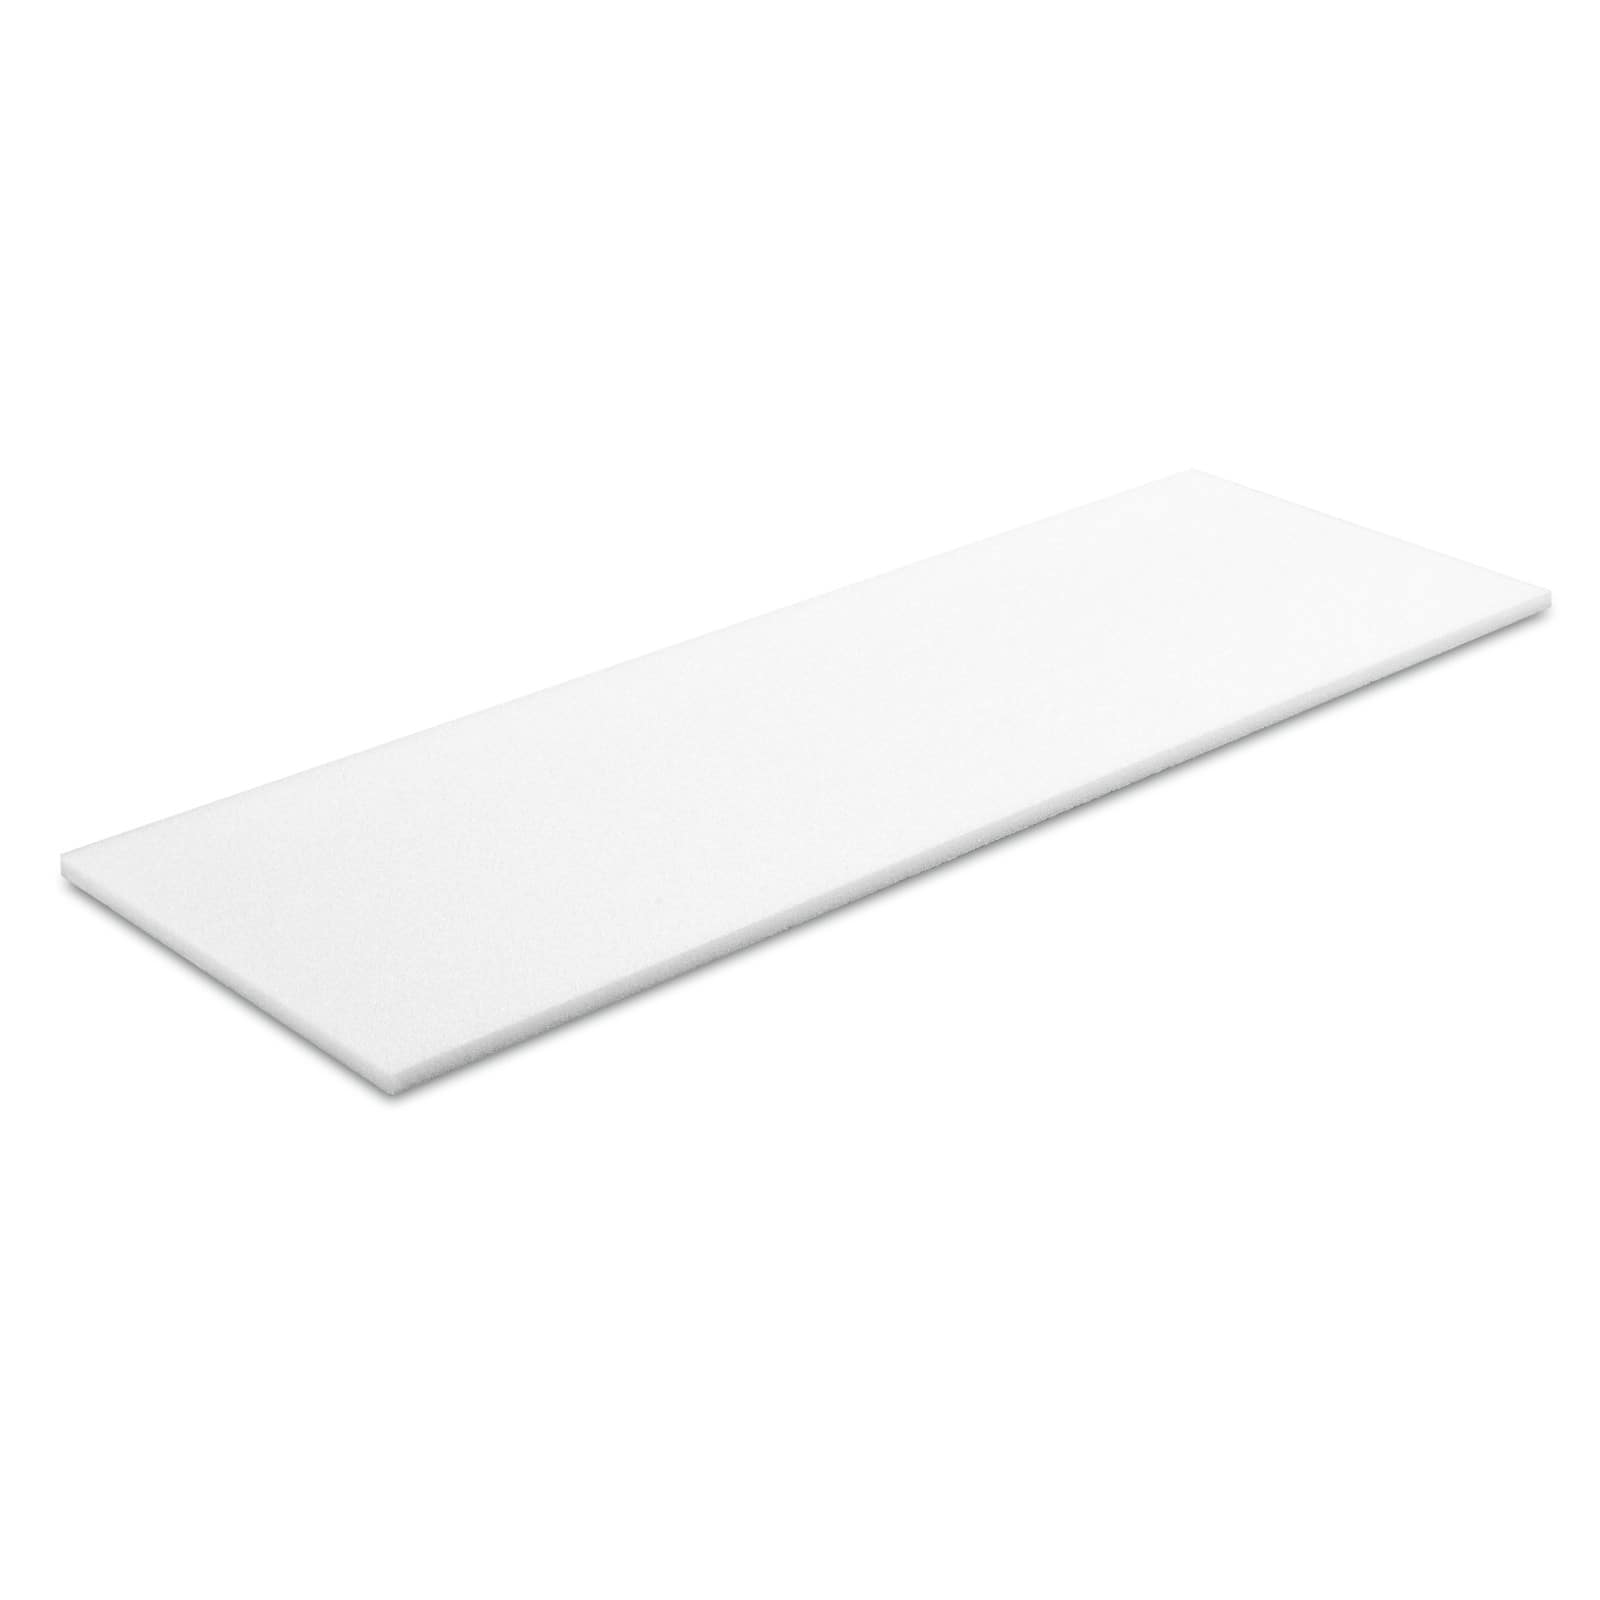 6 pcs NEW Styrofoam Sheets (14 1/2 X 12 X 3/4) - Craft Or